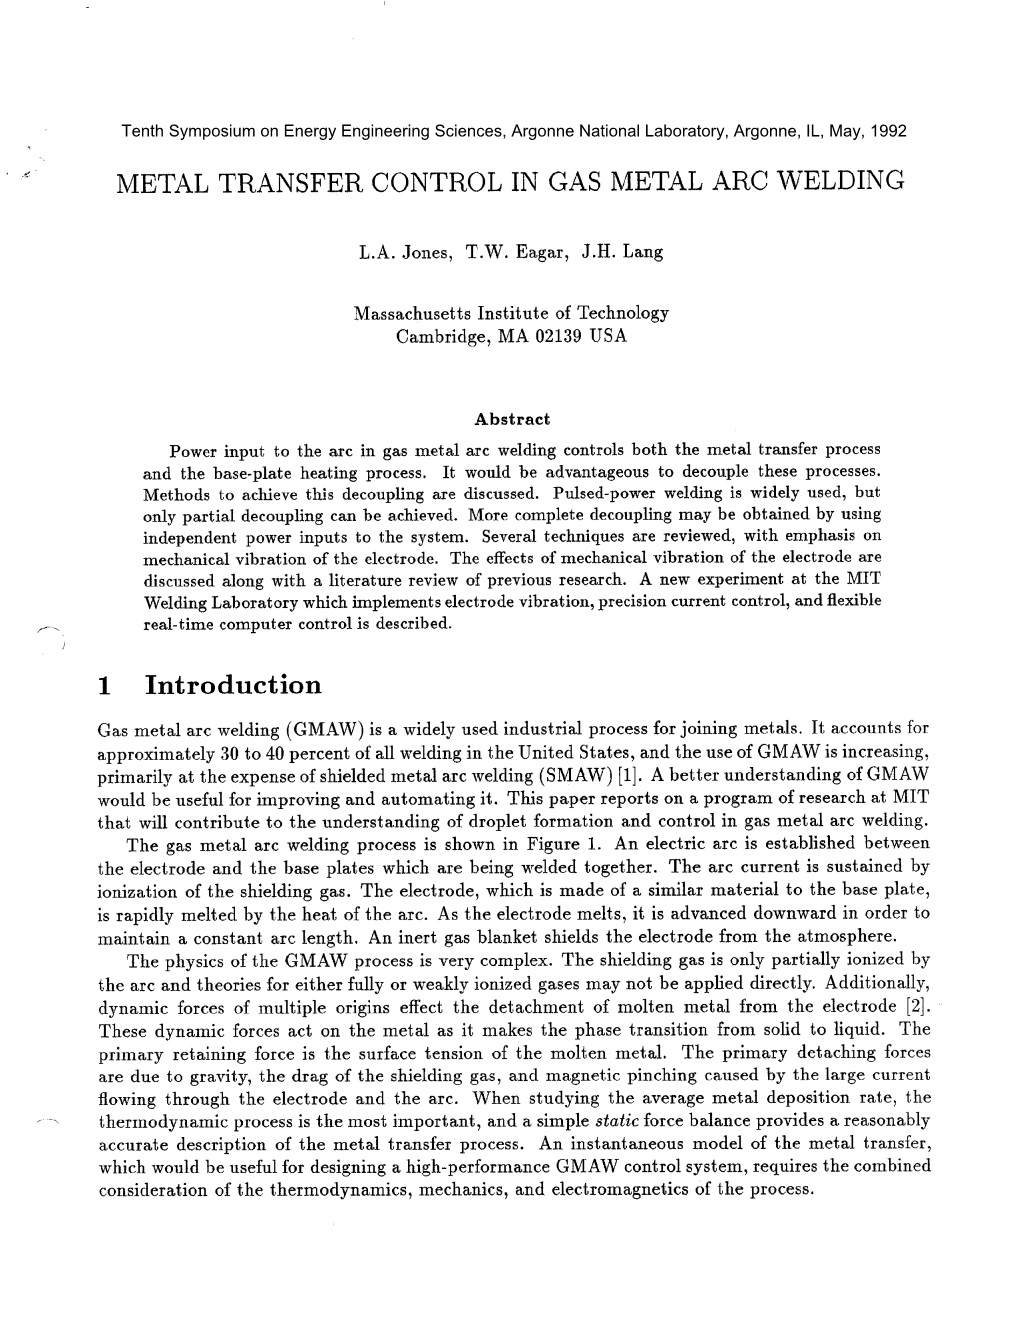 Metal Transfer Control in Gas Metal Arc Welding